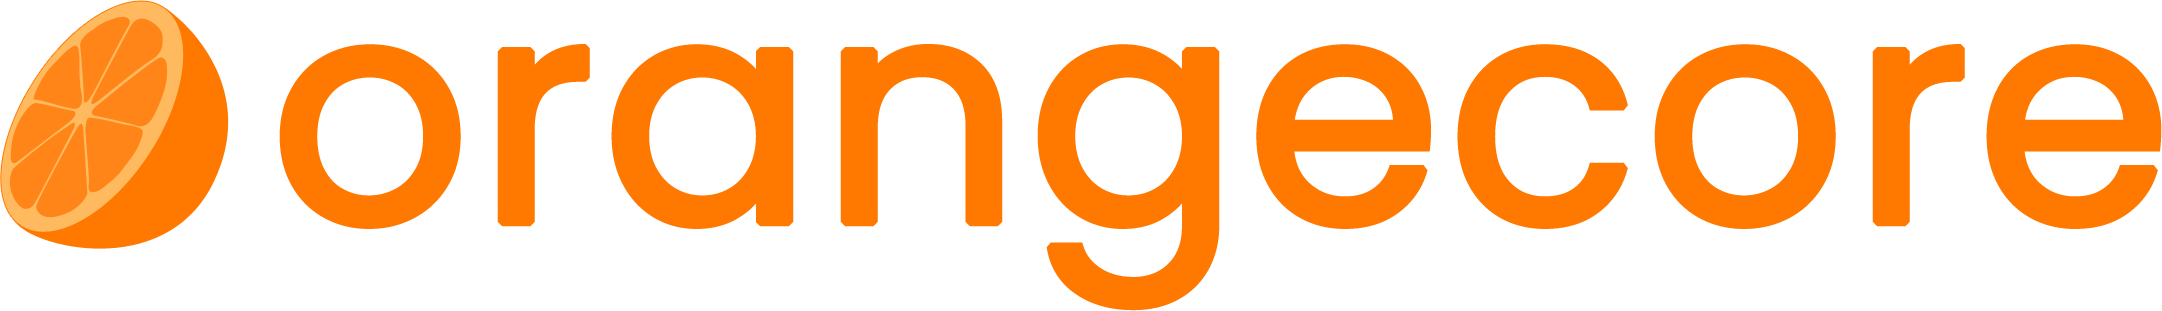 orangecore banner